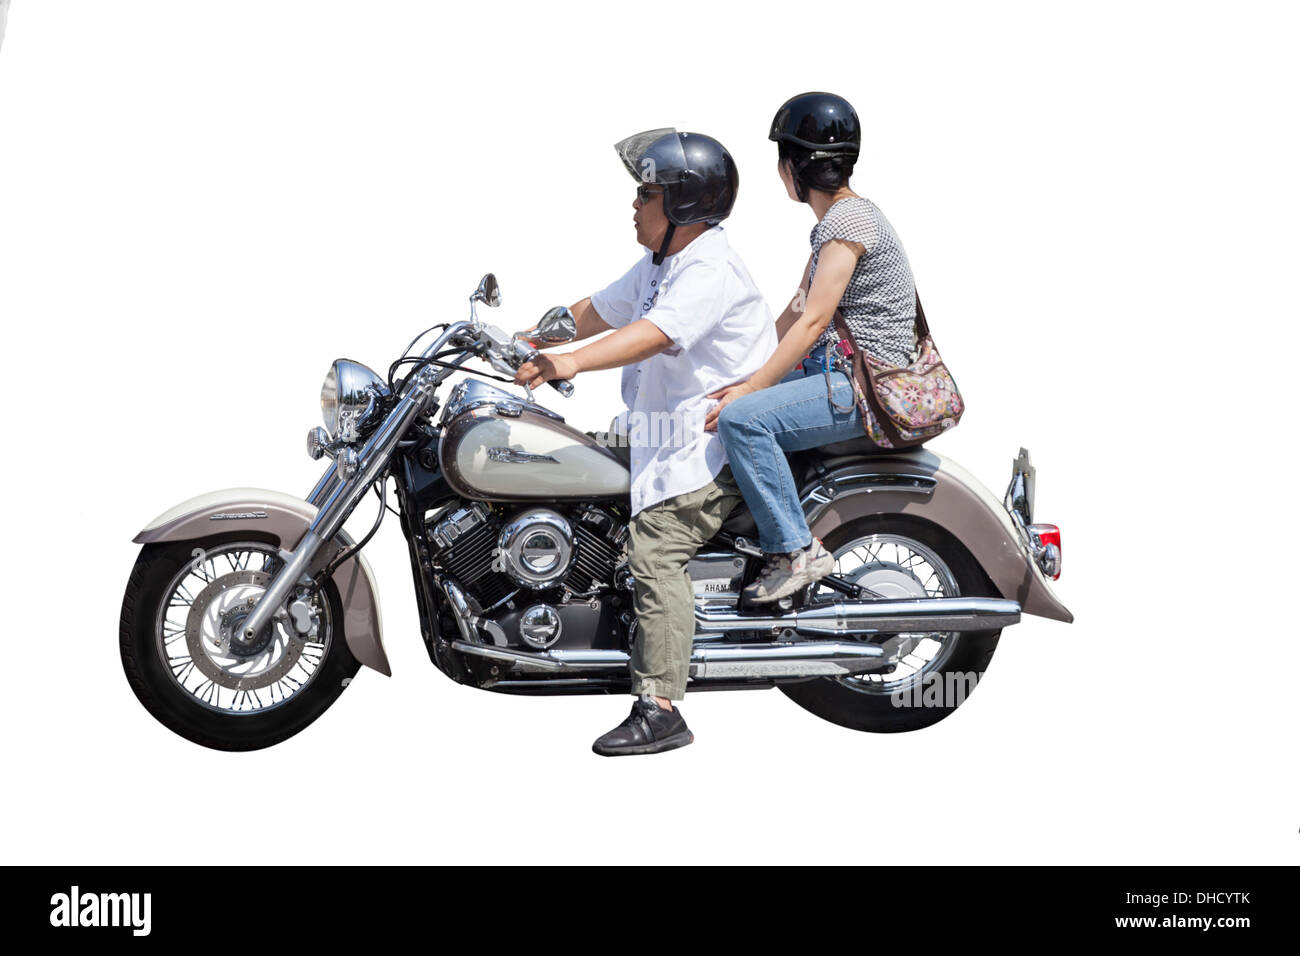 2 Japanese people on a motorbike in Tokyo, Japan Stock Photo